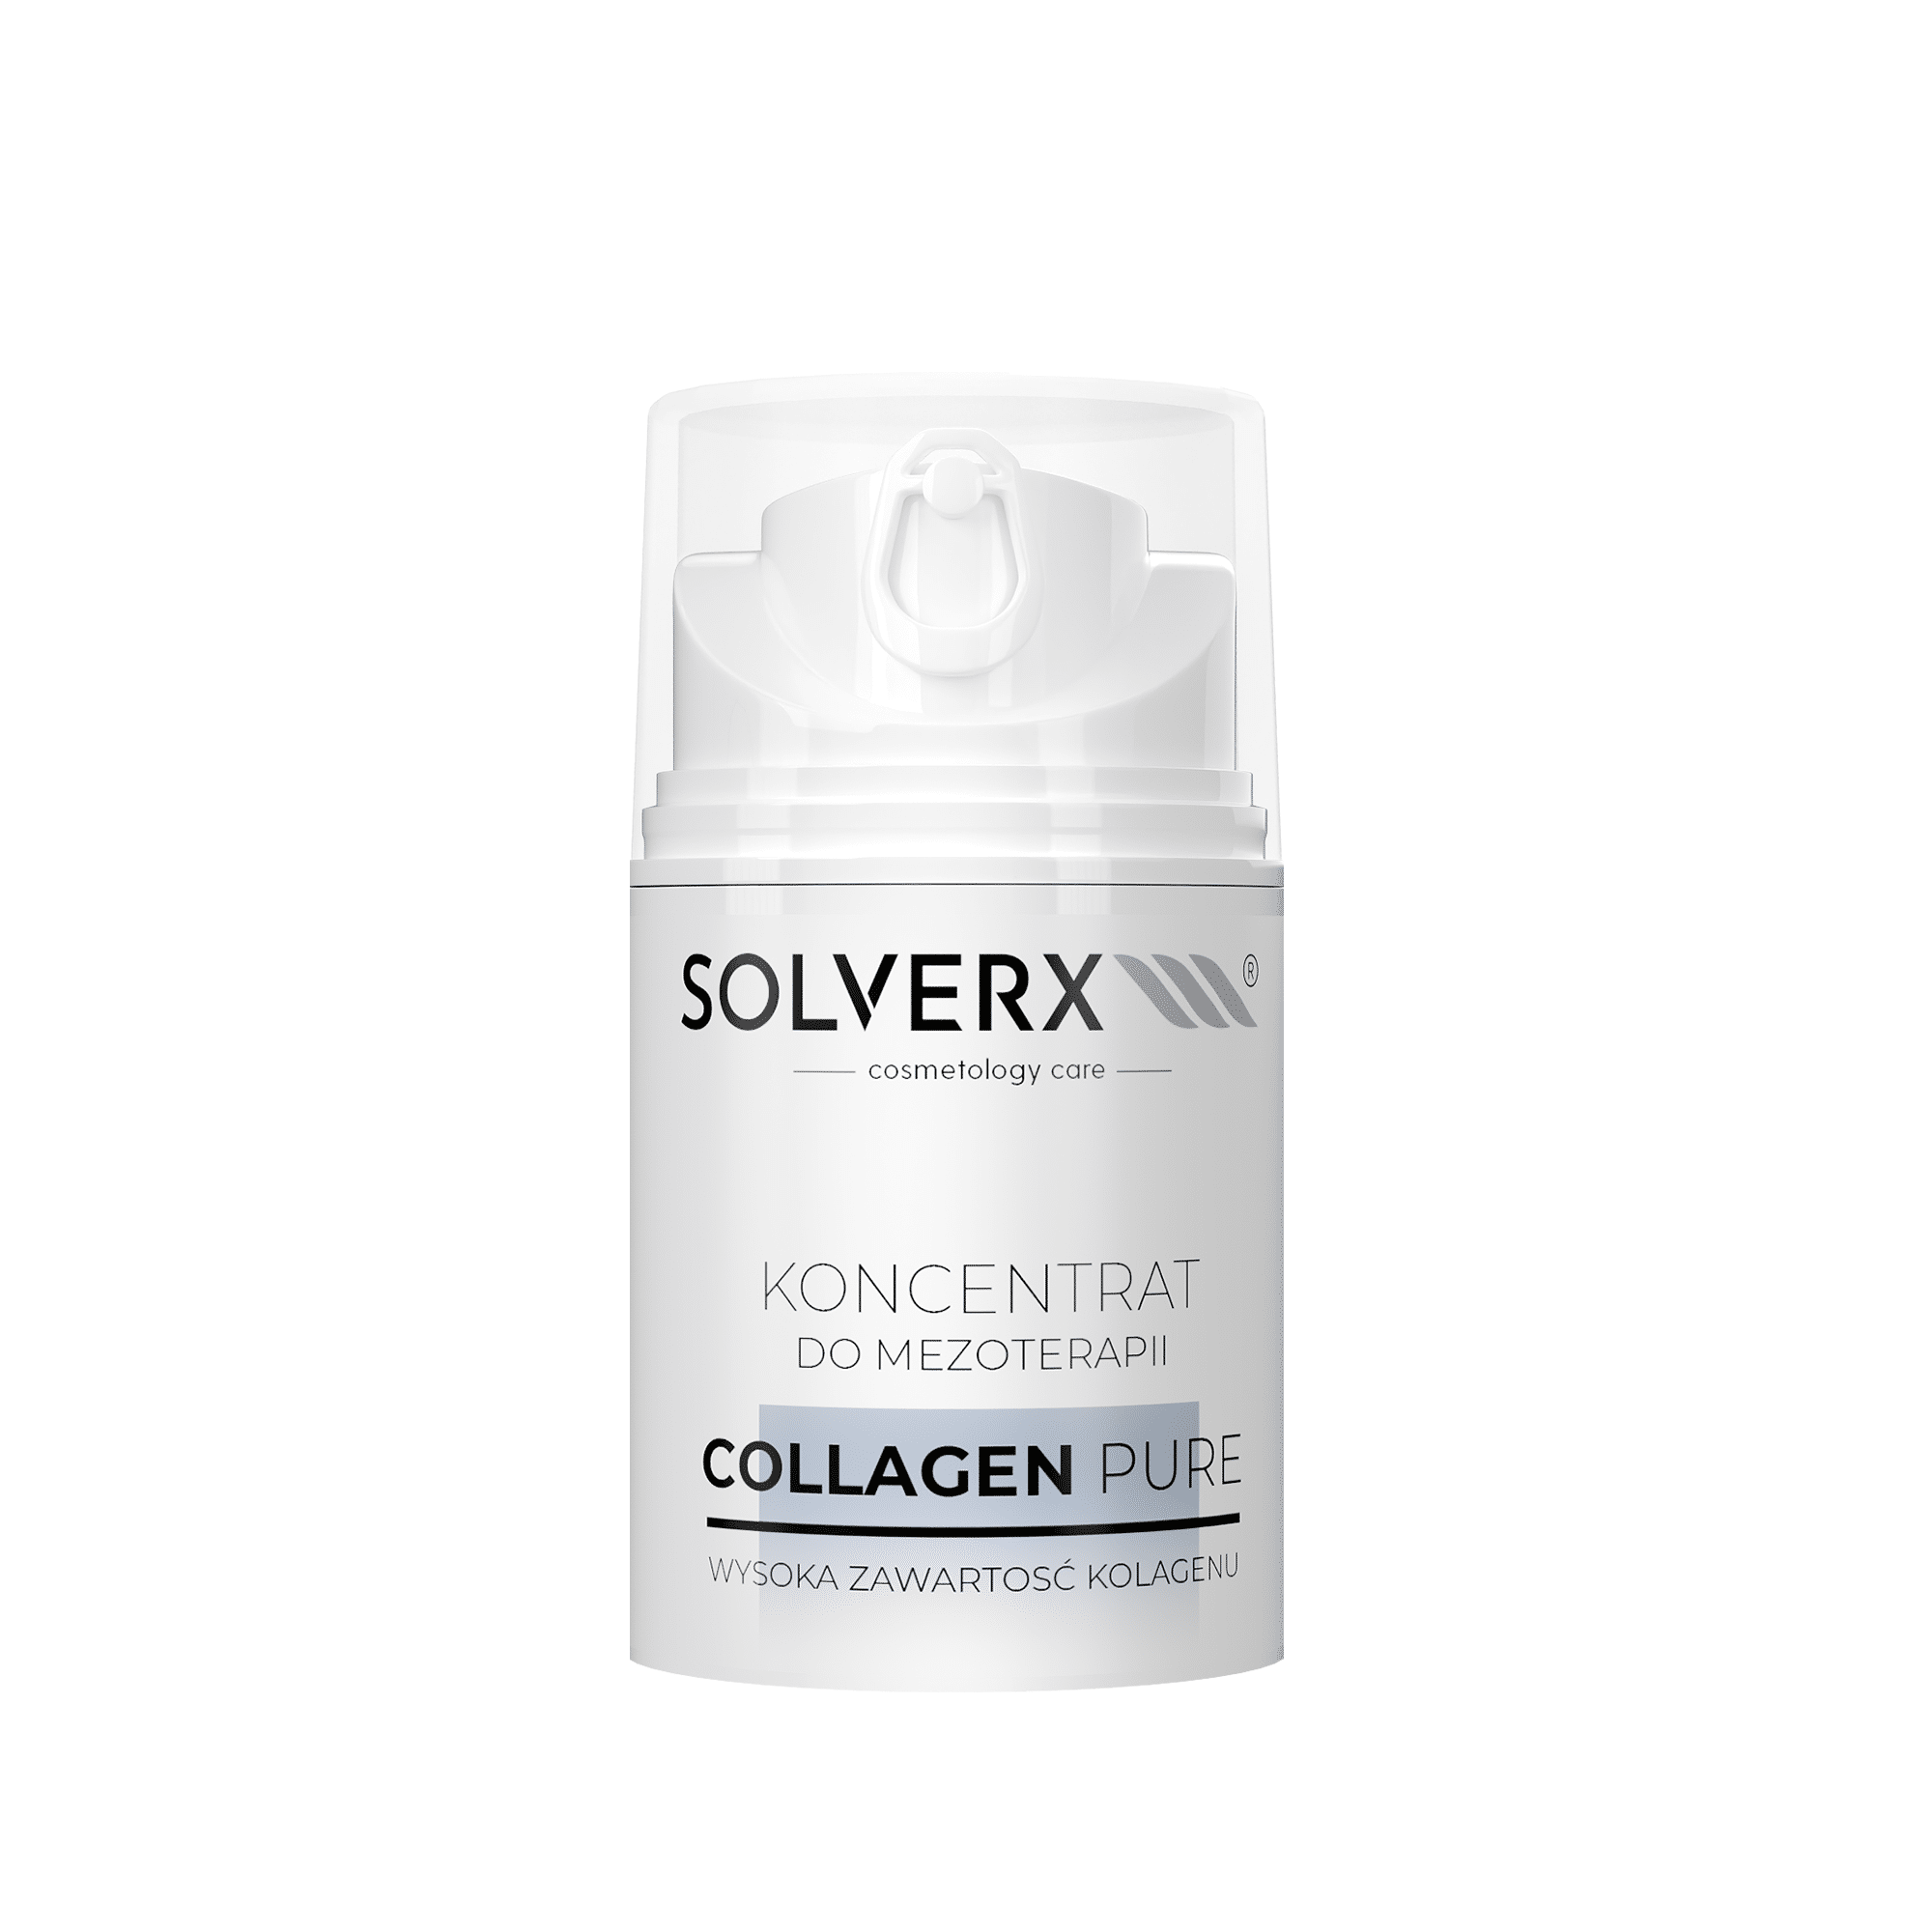 SOLVERX Cosmetology Care Collagen PURE koncentrat do mezoterapii 50ml